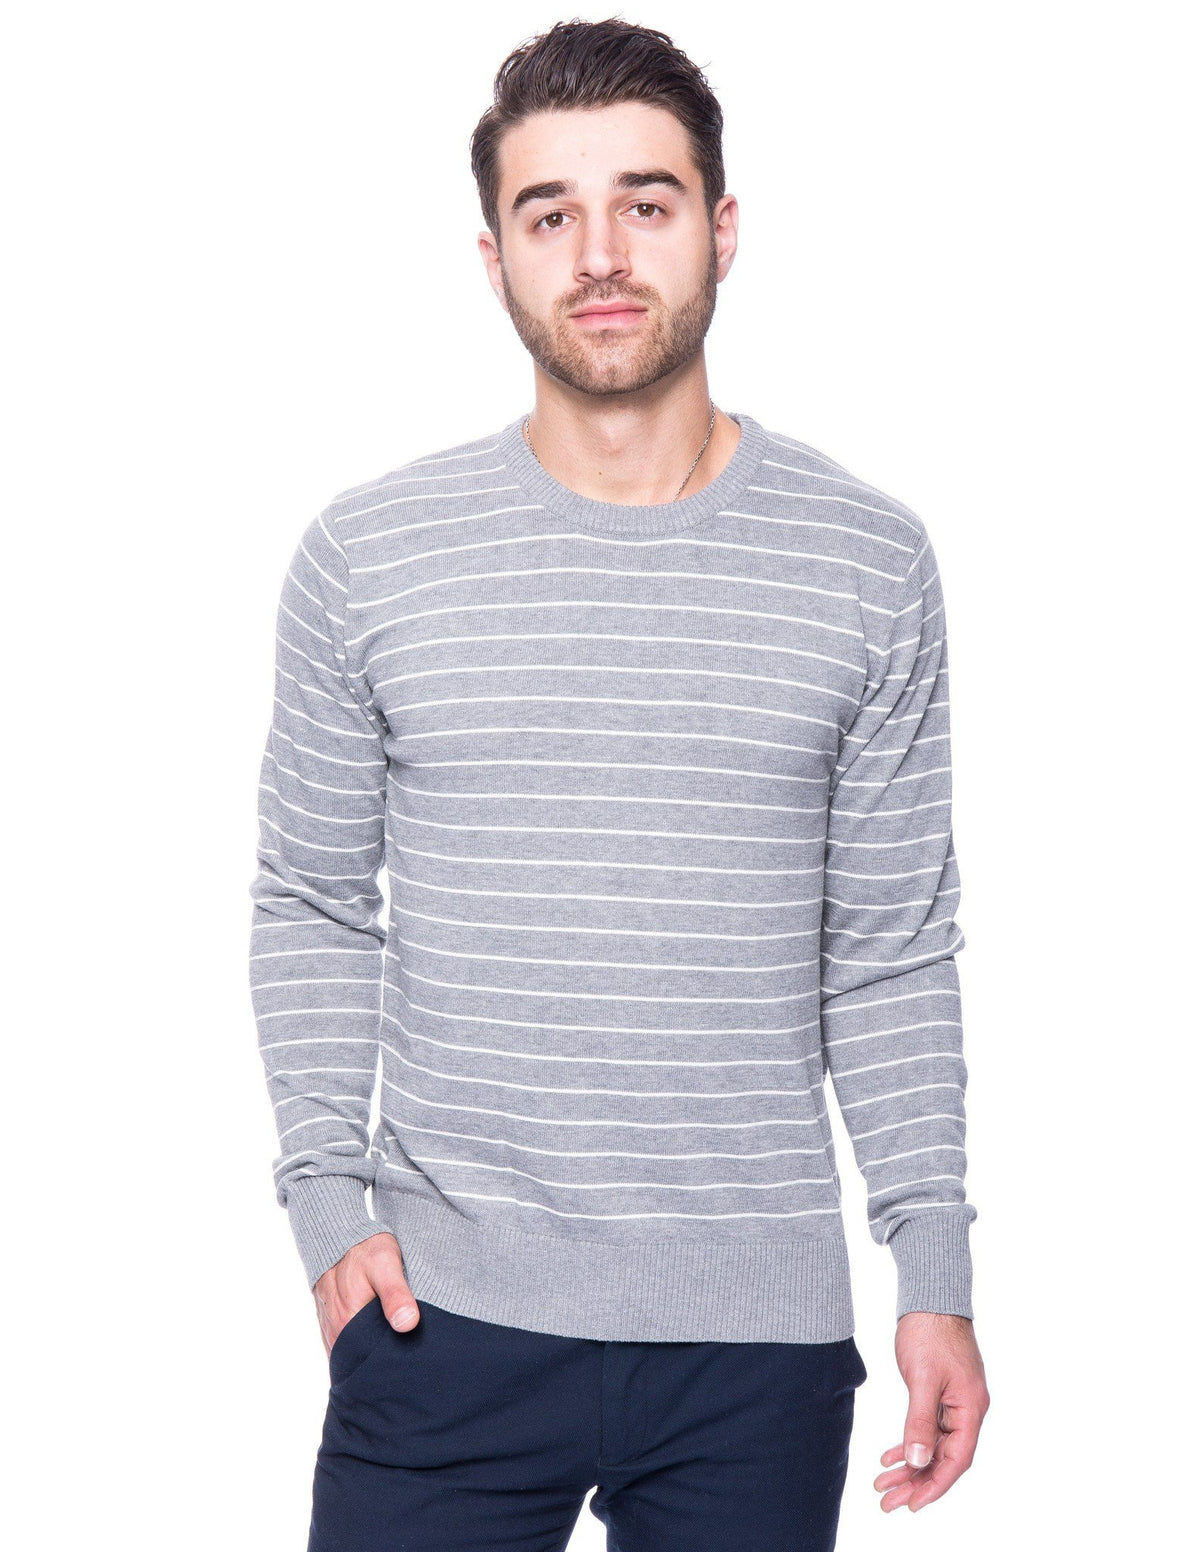 Men's 100% Cotton Crew Neck Sweater - Stripes Heather Grey/Ivory